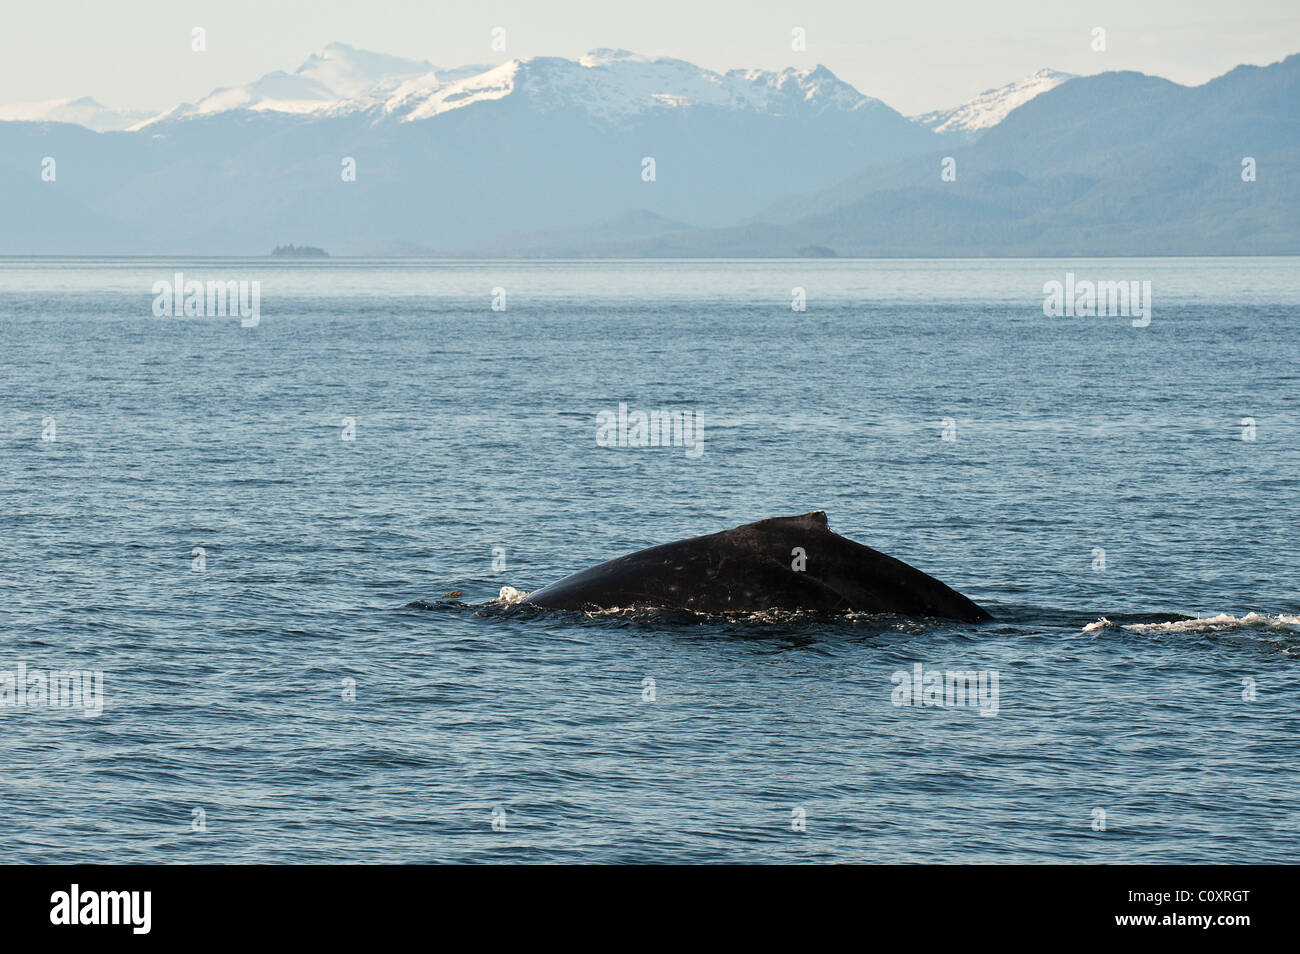 Alaska. Humpback whales (Megaptera novaeangliae) in the Five Finger Islands area of Frederick Sound, Southeast Alaska. Stock Photo